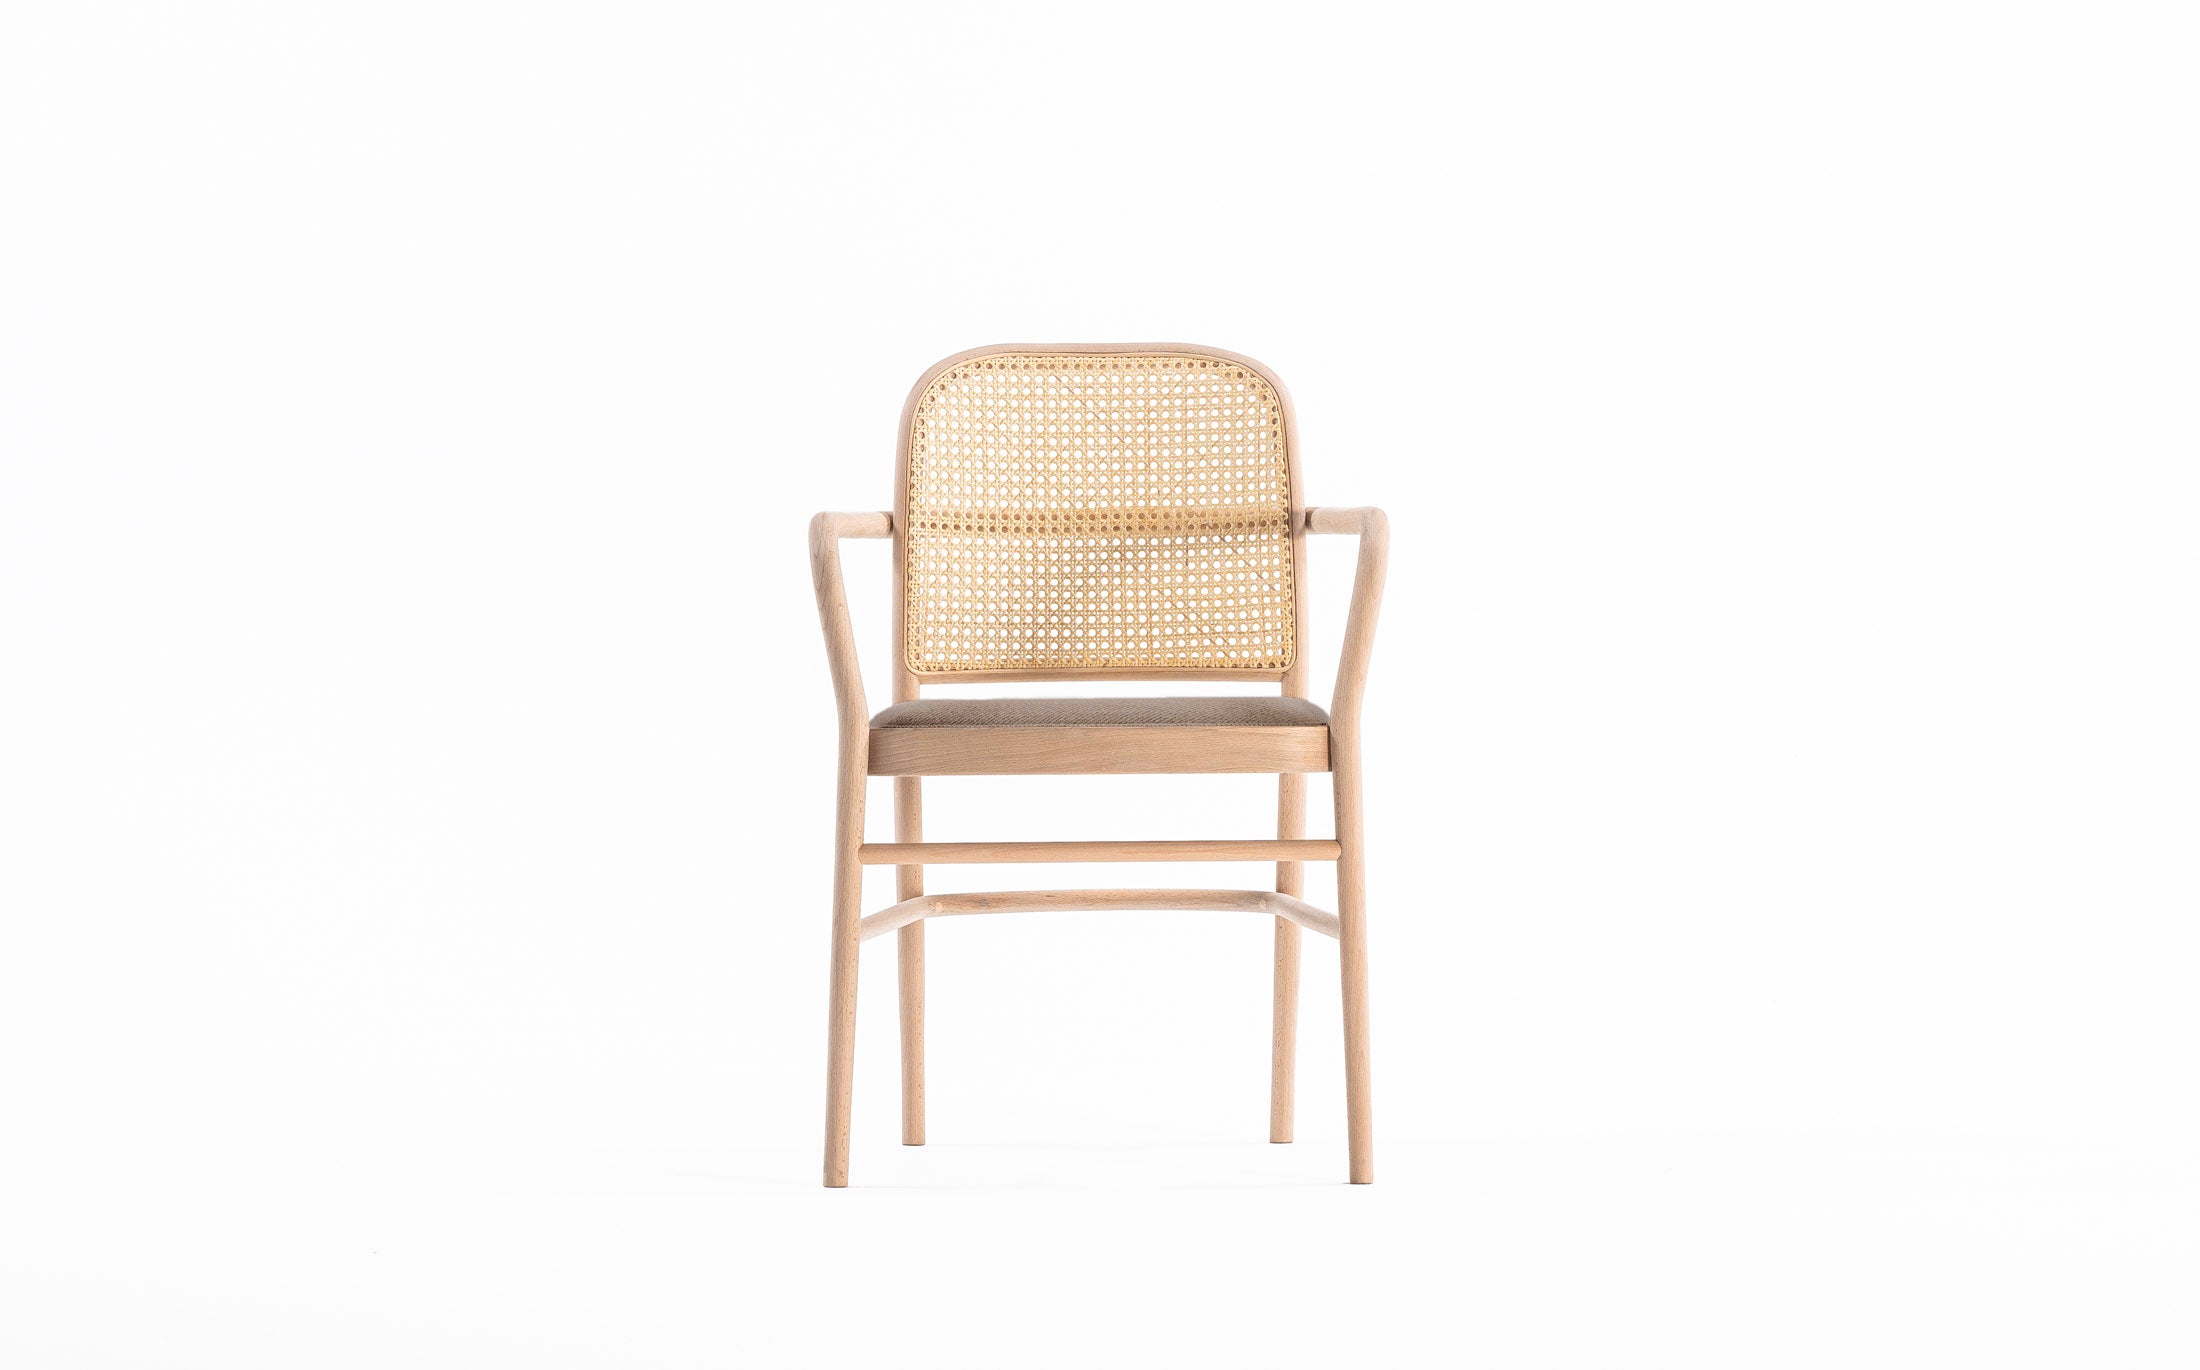 The bent armchair #Seat materials_fabric1 bergen 03/07